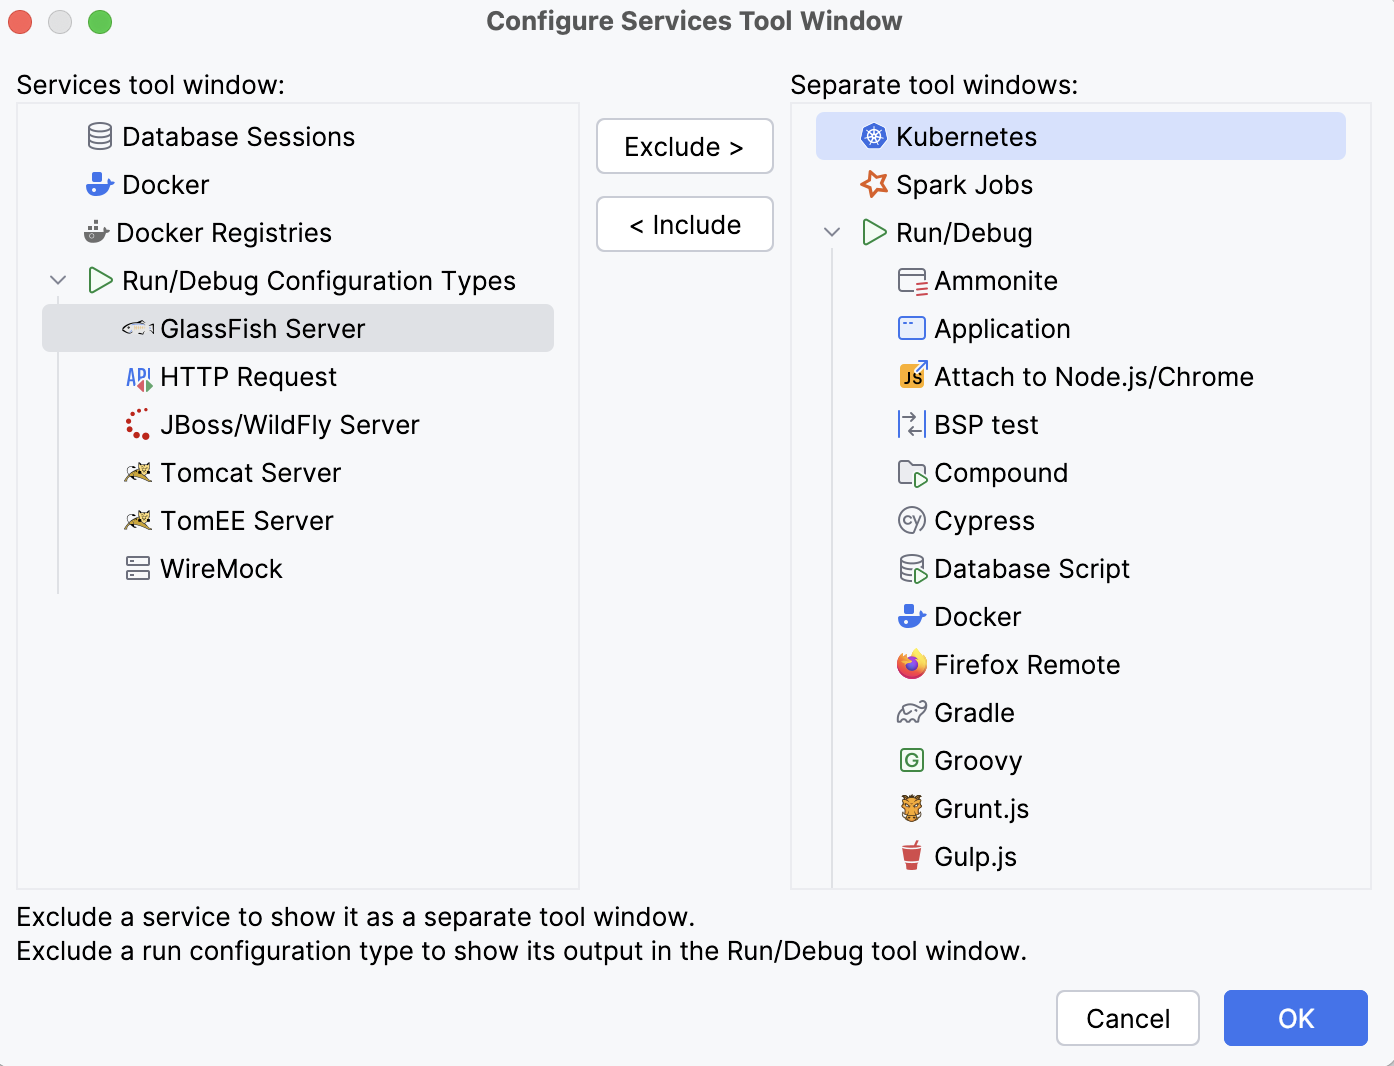 Configure Services tool window